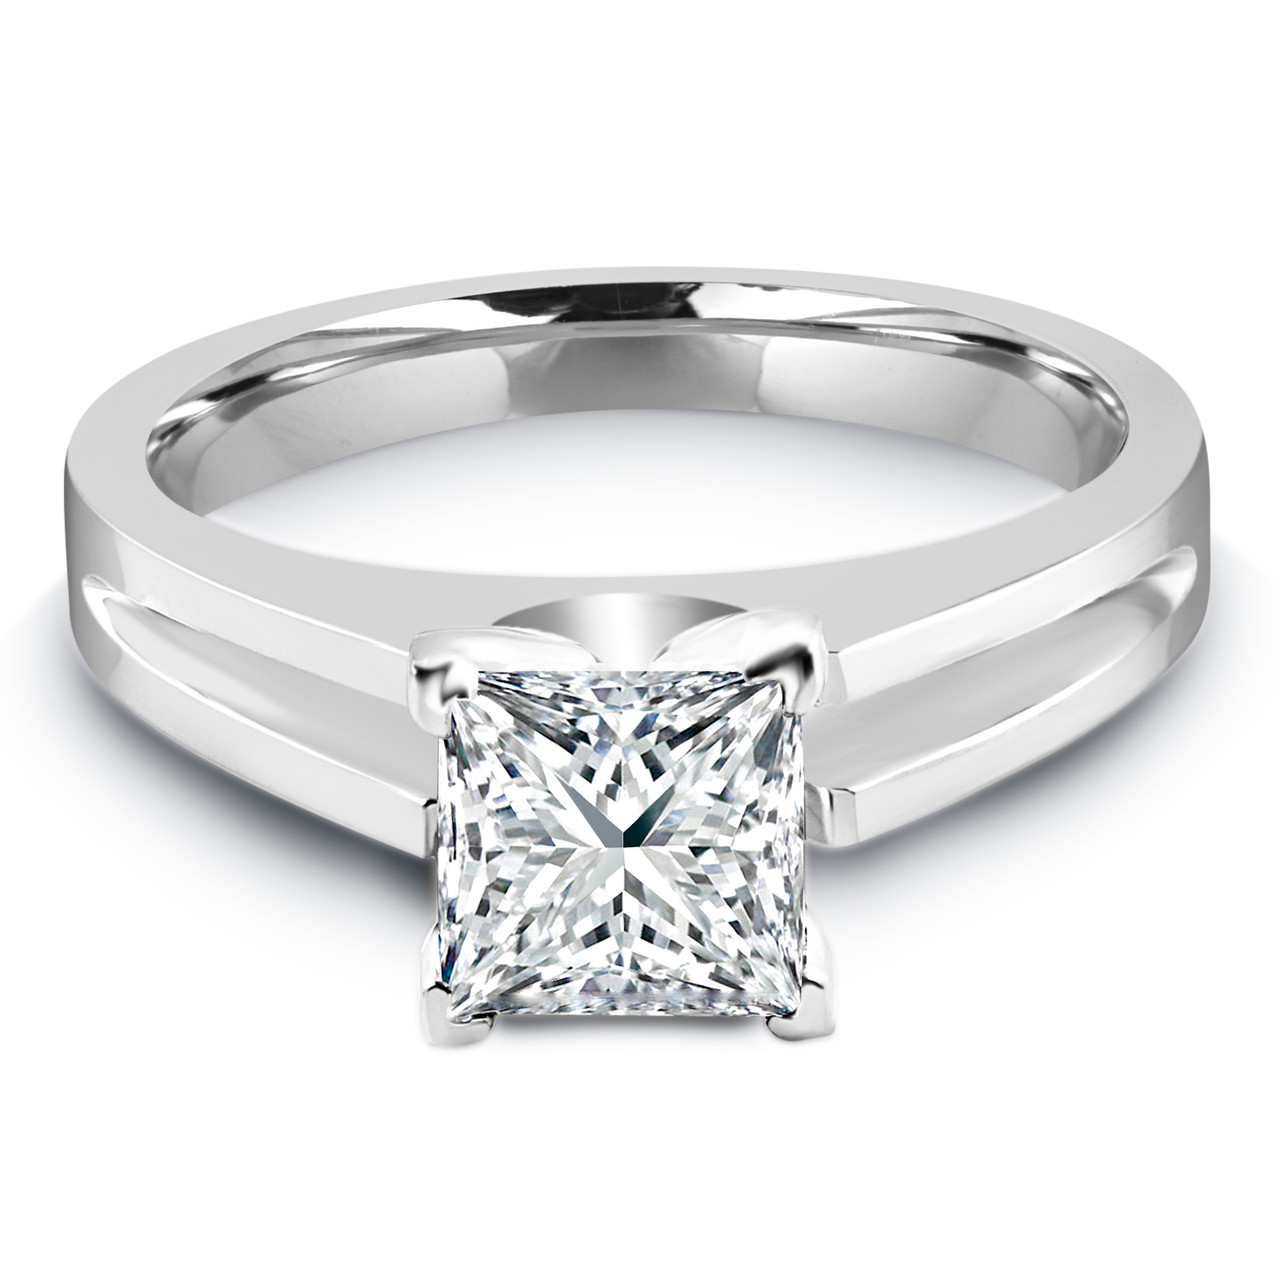 Buy Lab Grown Diamond Engagement Ring Cathedral Split Shank Solitaire Diamond  Engagement Ring 1 carat Cushion Shape Certified Diamond at Amazon.in